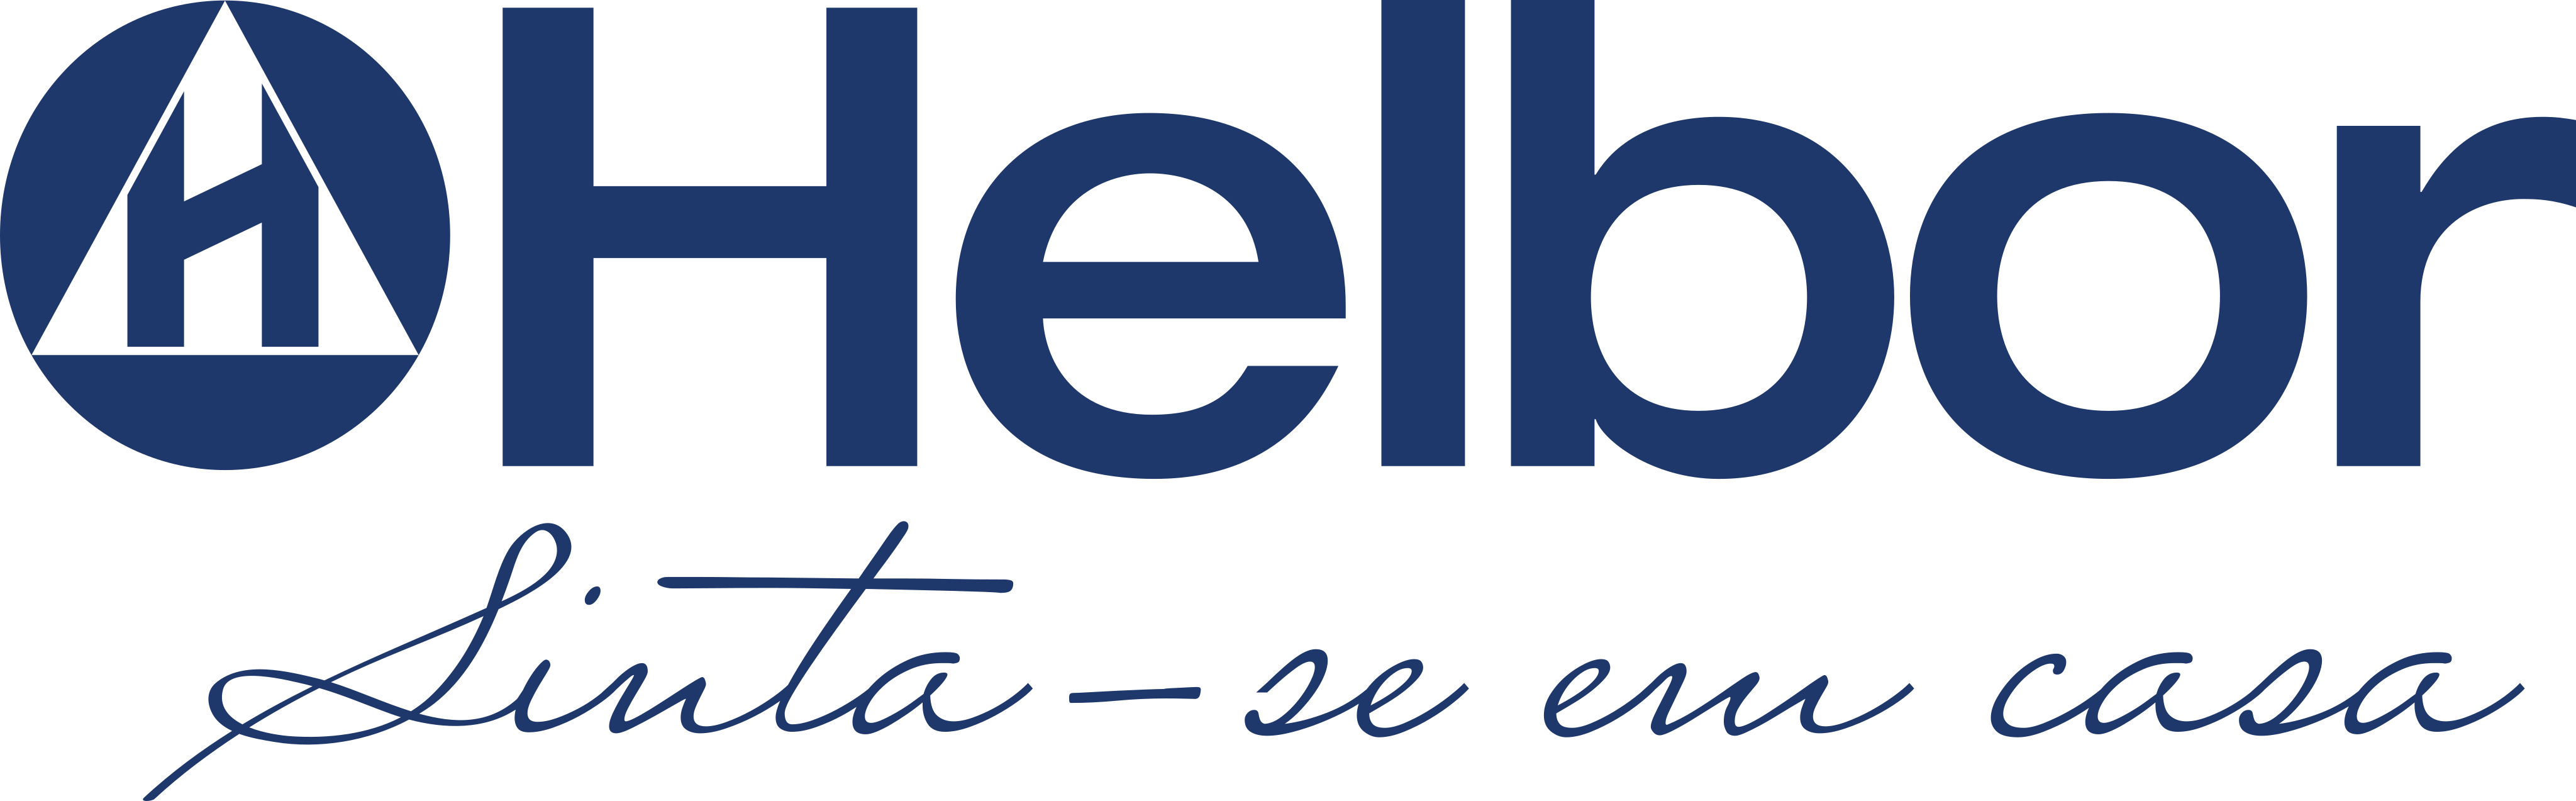 helbor-logo-1